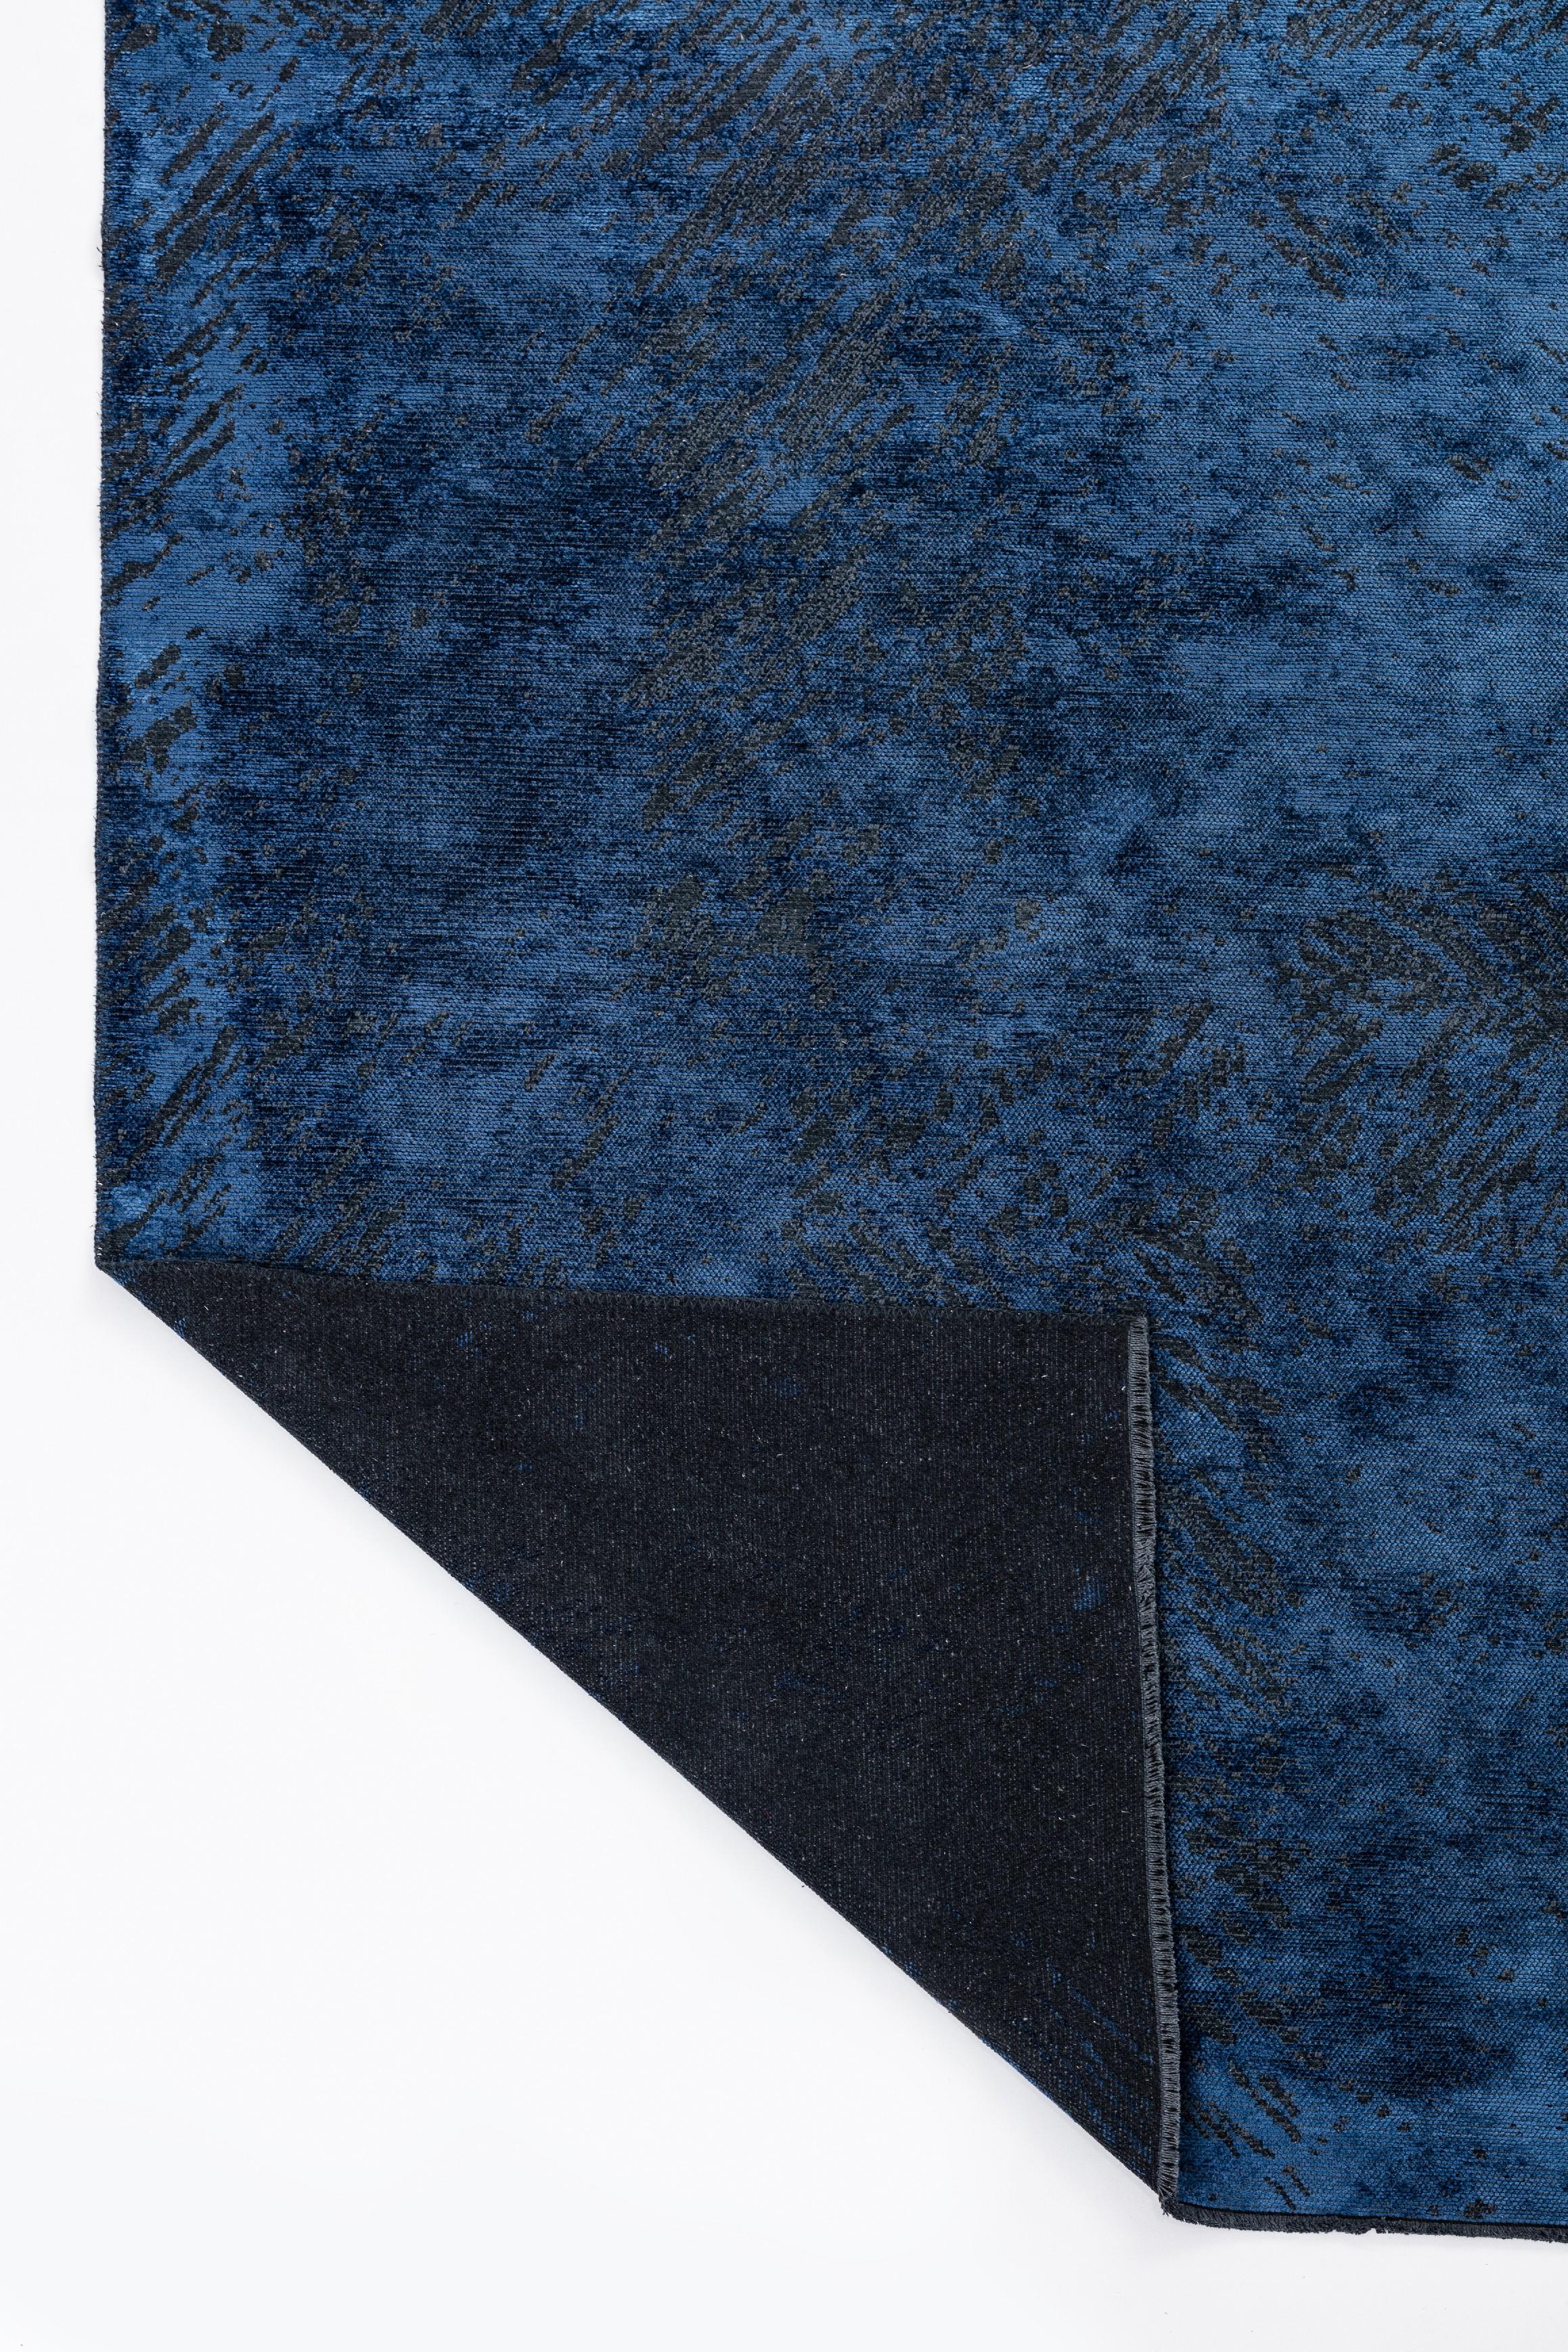 En vente :  (Bleu) Moderne  Tapis de sol abstrait de luxe 3